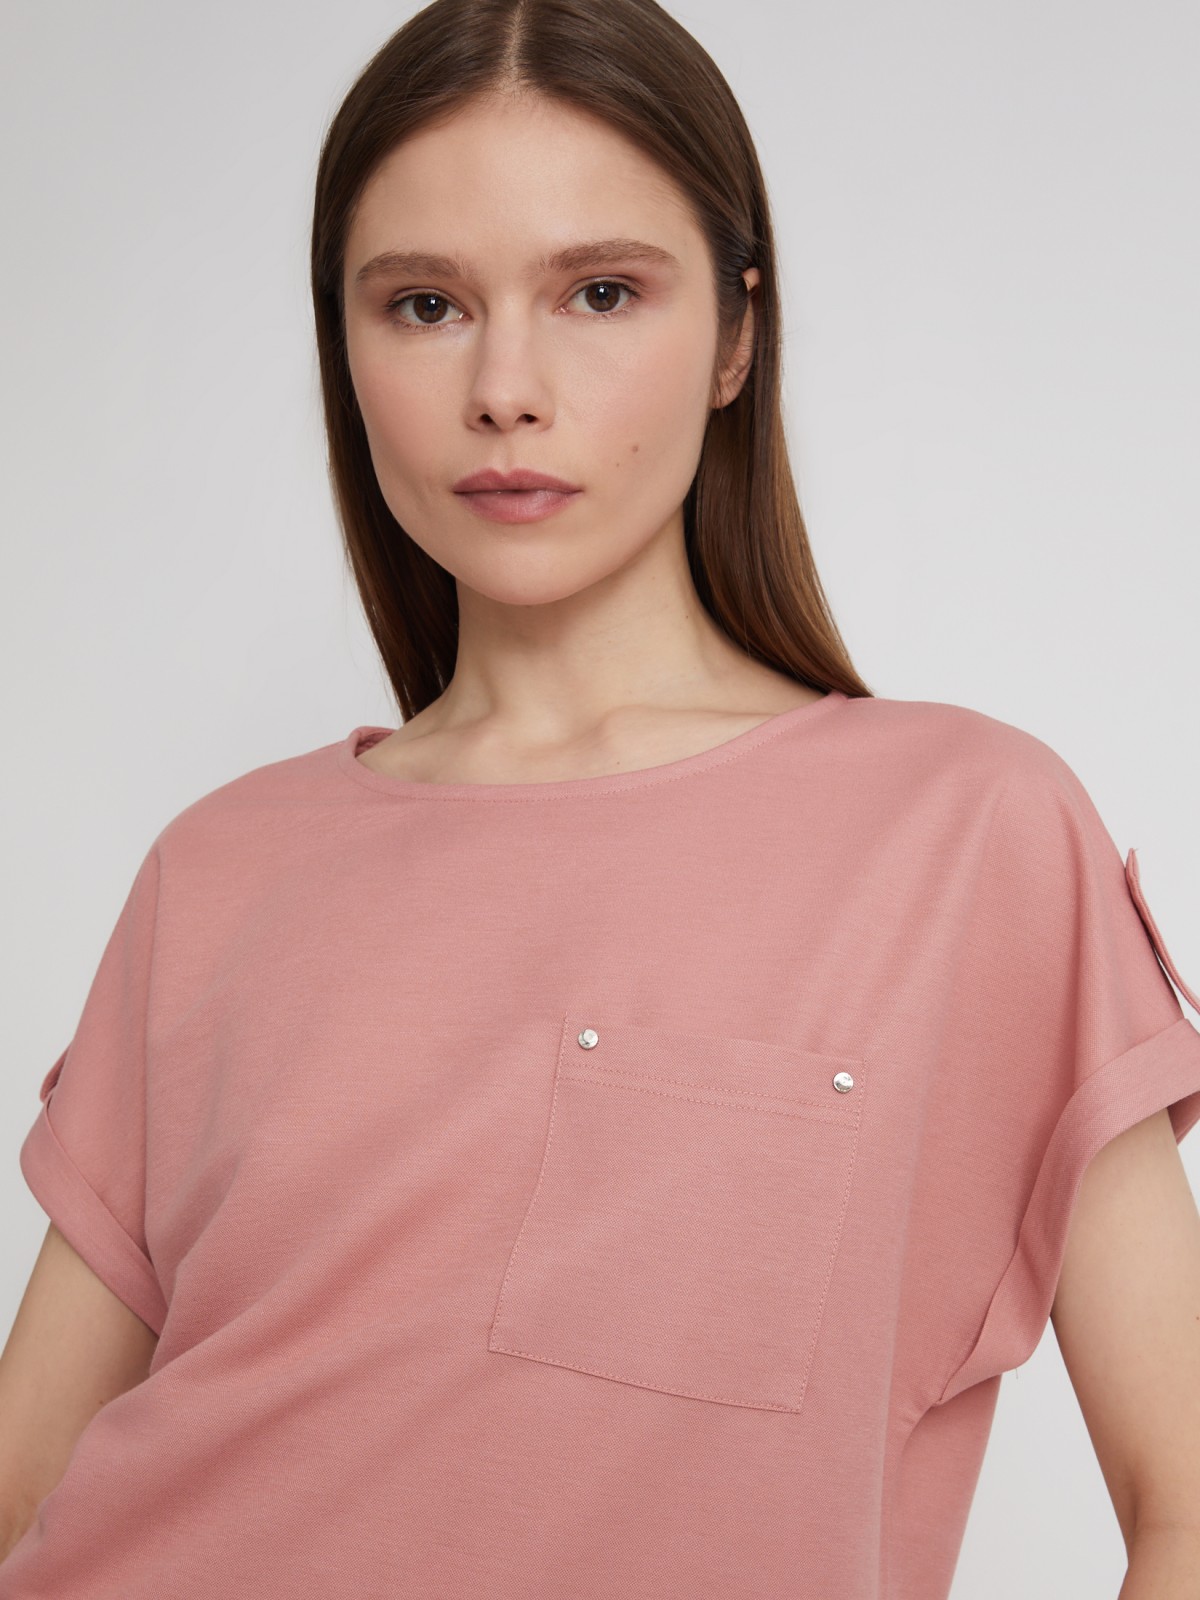 Блузка-футболка с коротким рукавом zolla 023213259023, цвет розовый, размер XS - фото 5